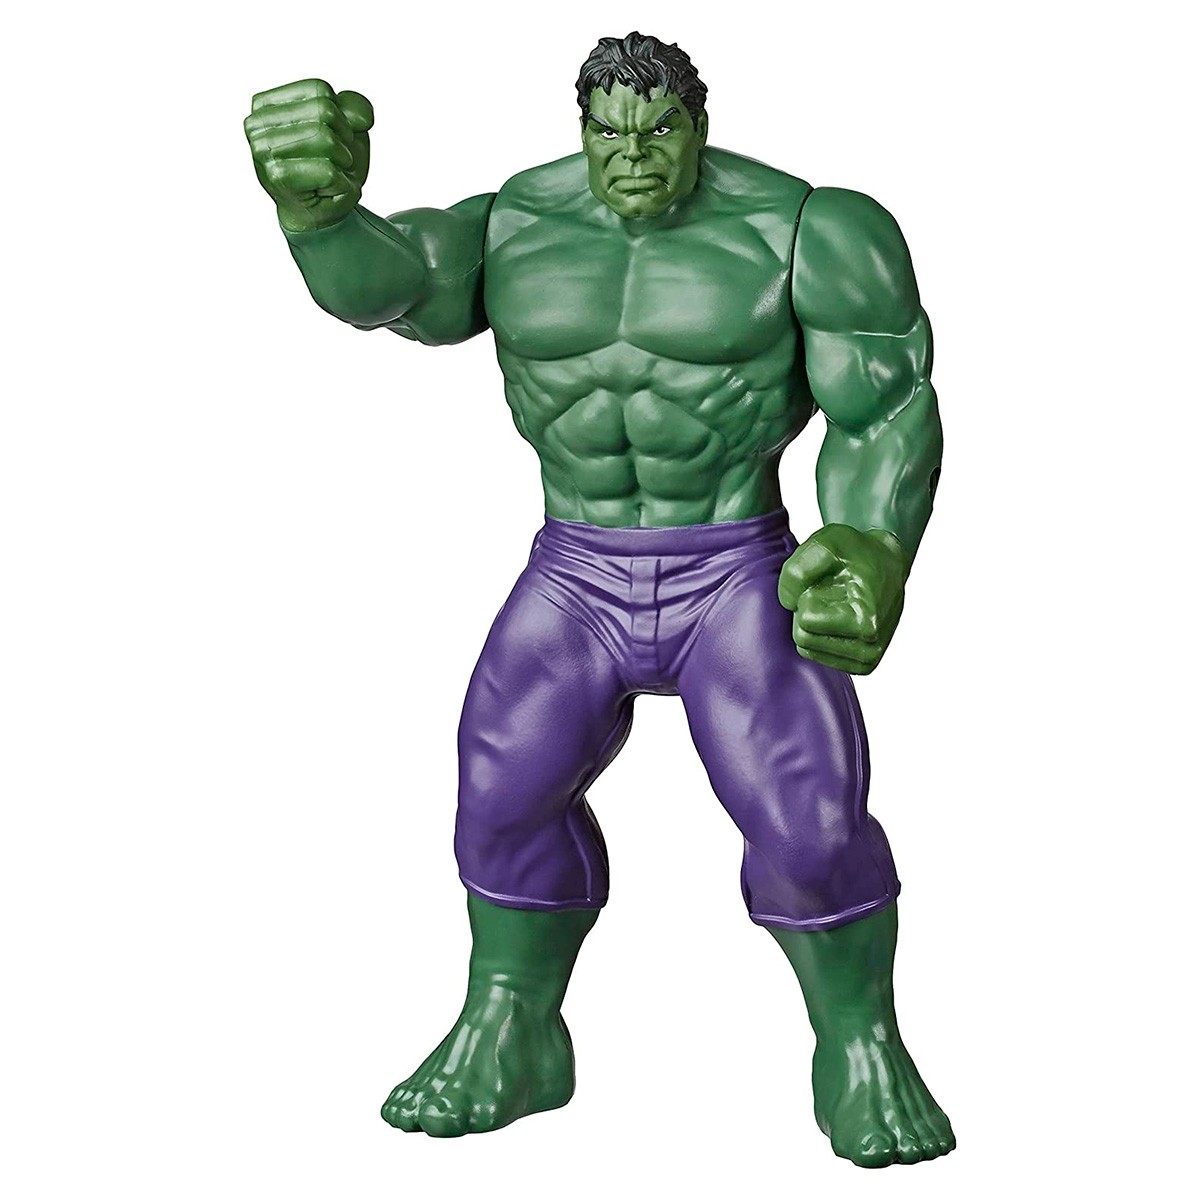 Comprar Boneco Super Heróis Hulk Marvel Ref.: E7825 Hasbro